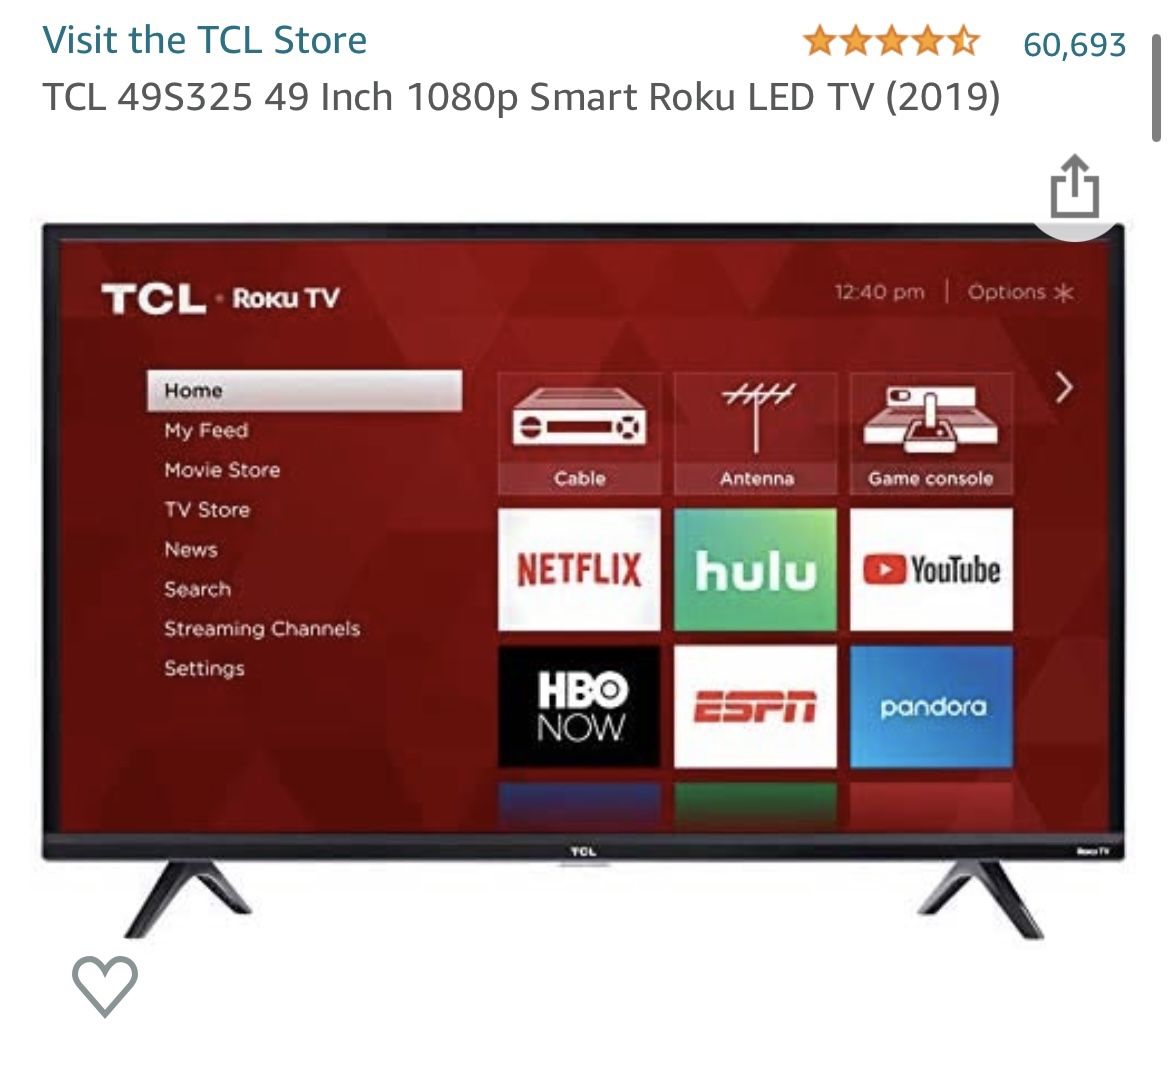 TCL 49S325 49 Inch 1080p Smart Roku LED TV (2019)